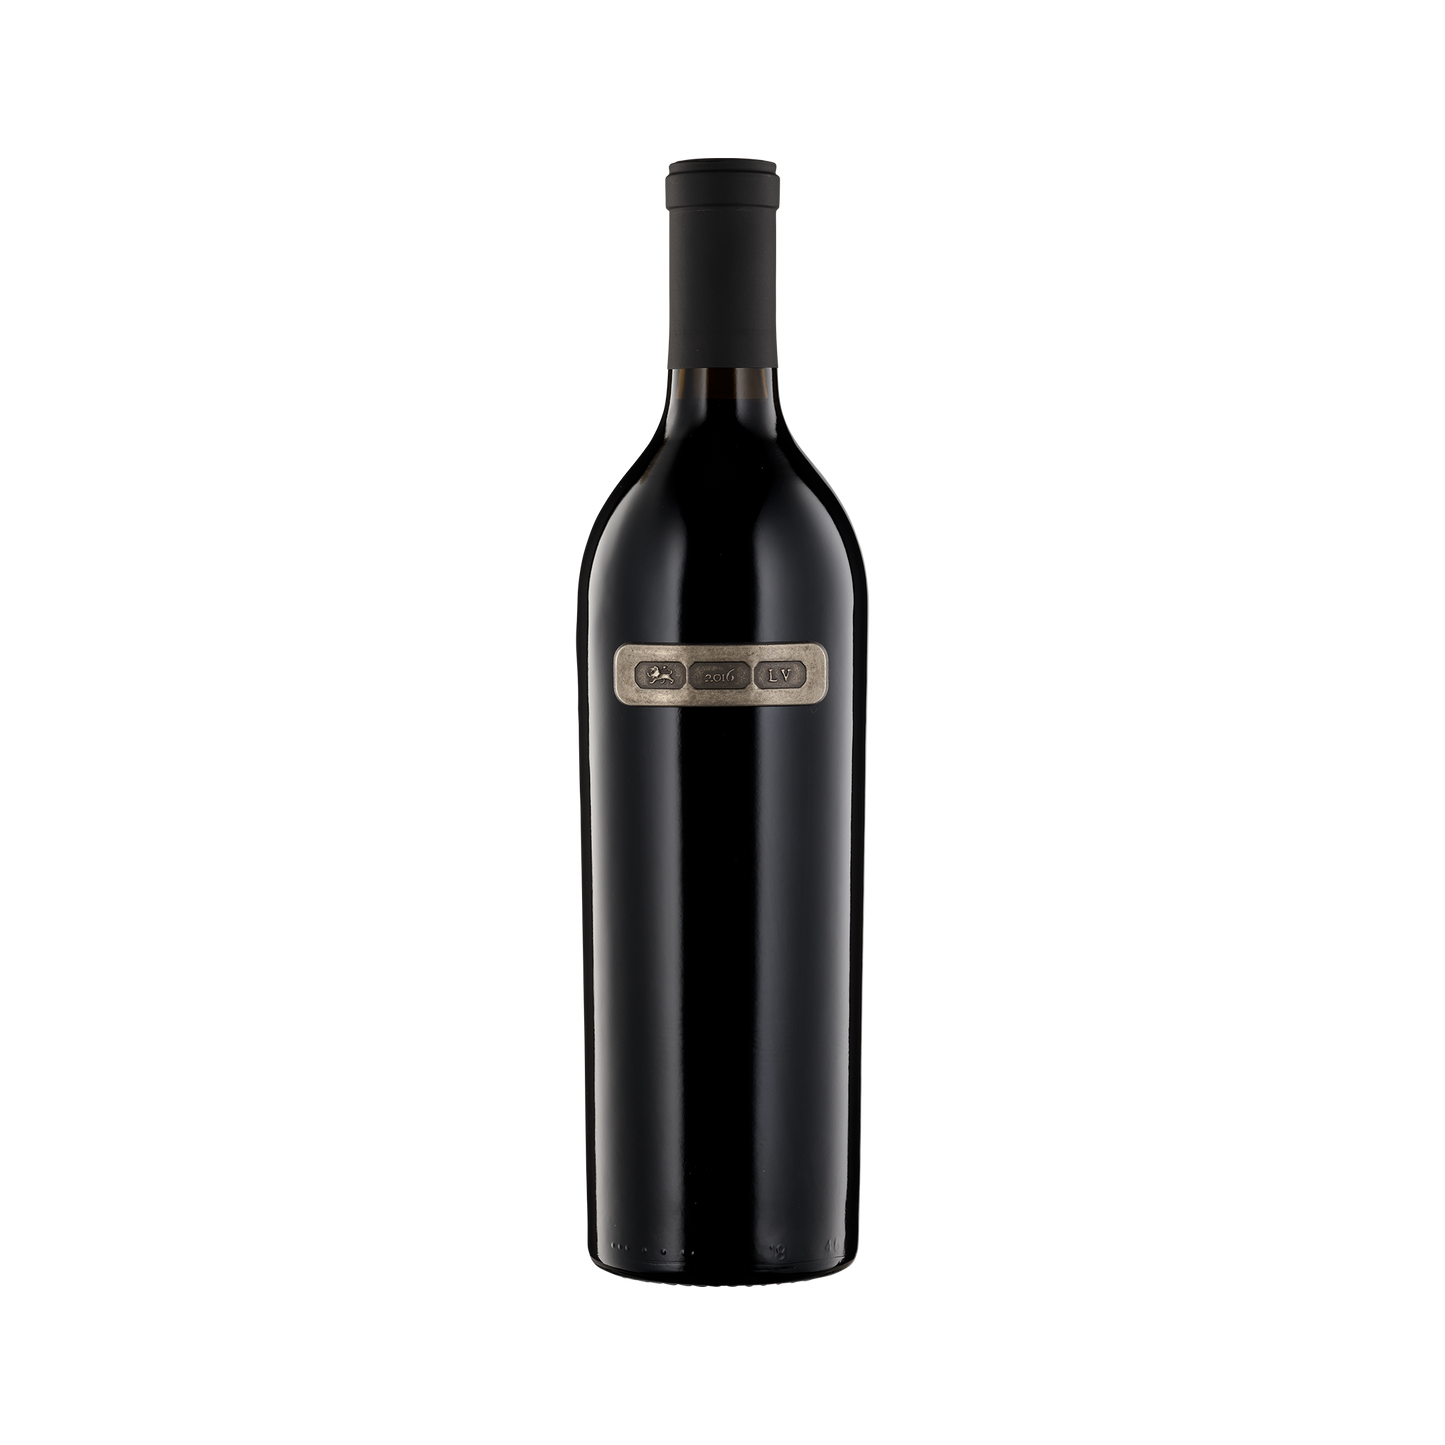 A bottle of Whitehall Lane Winery 2016 Cabernet Sauvignon Leonardini Vineyard